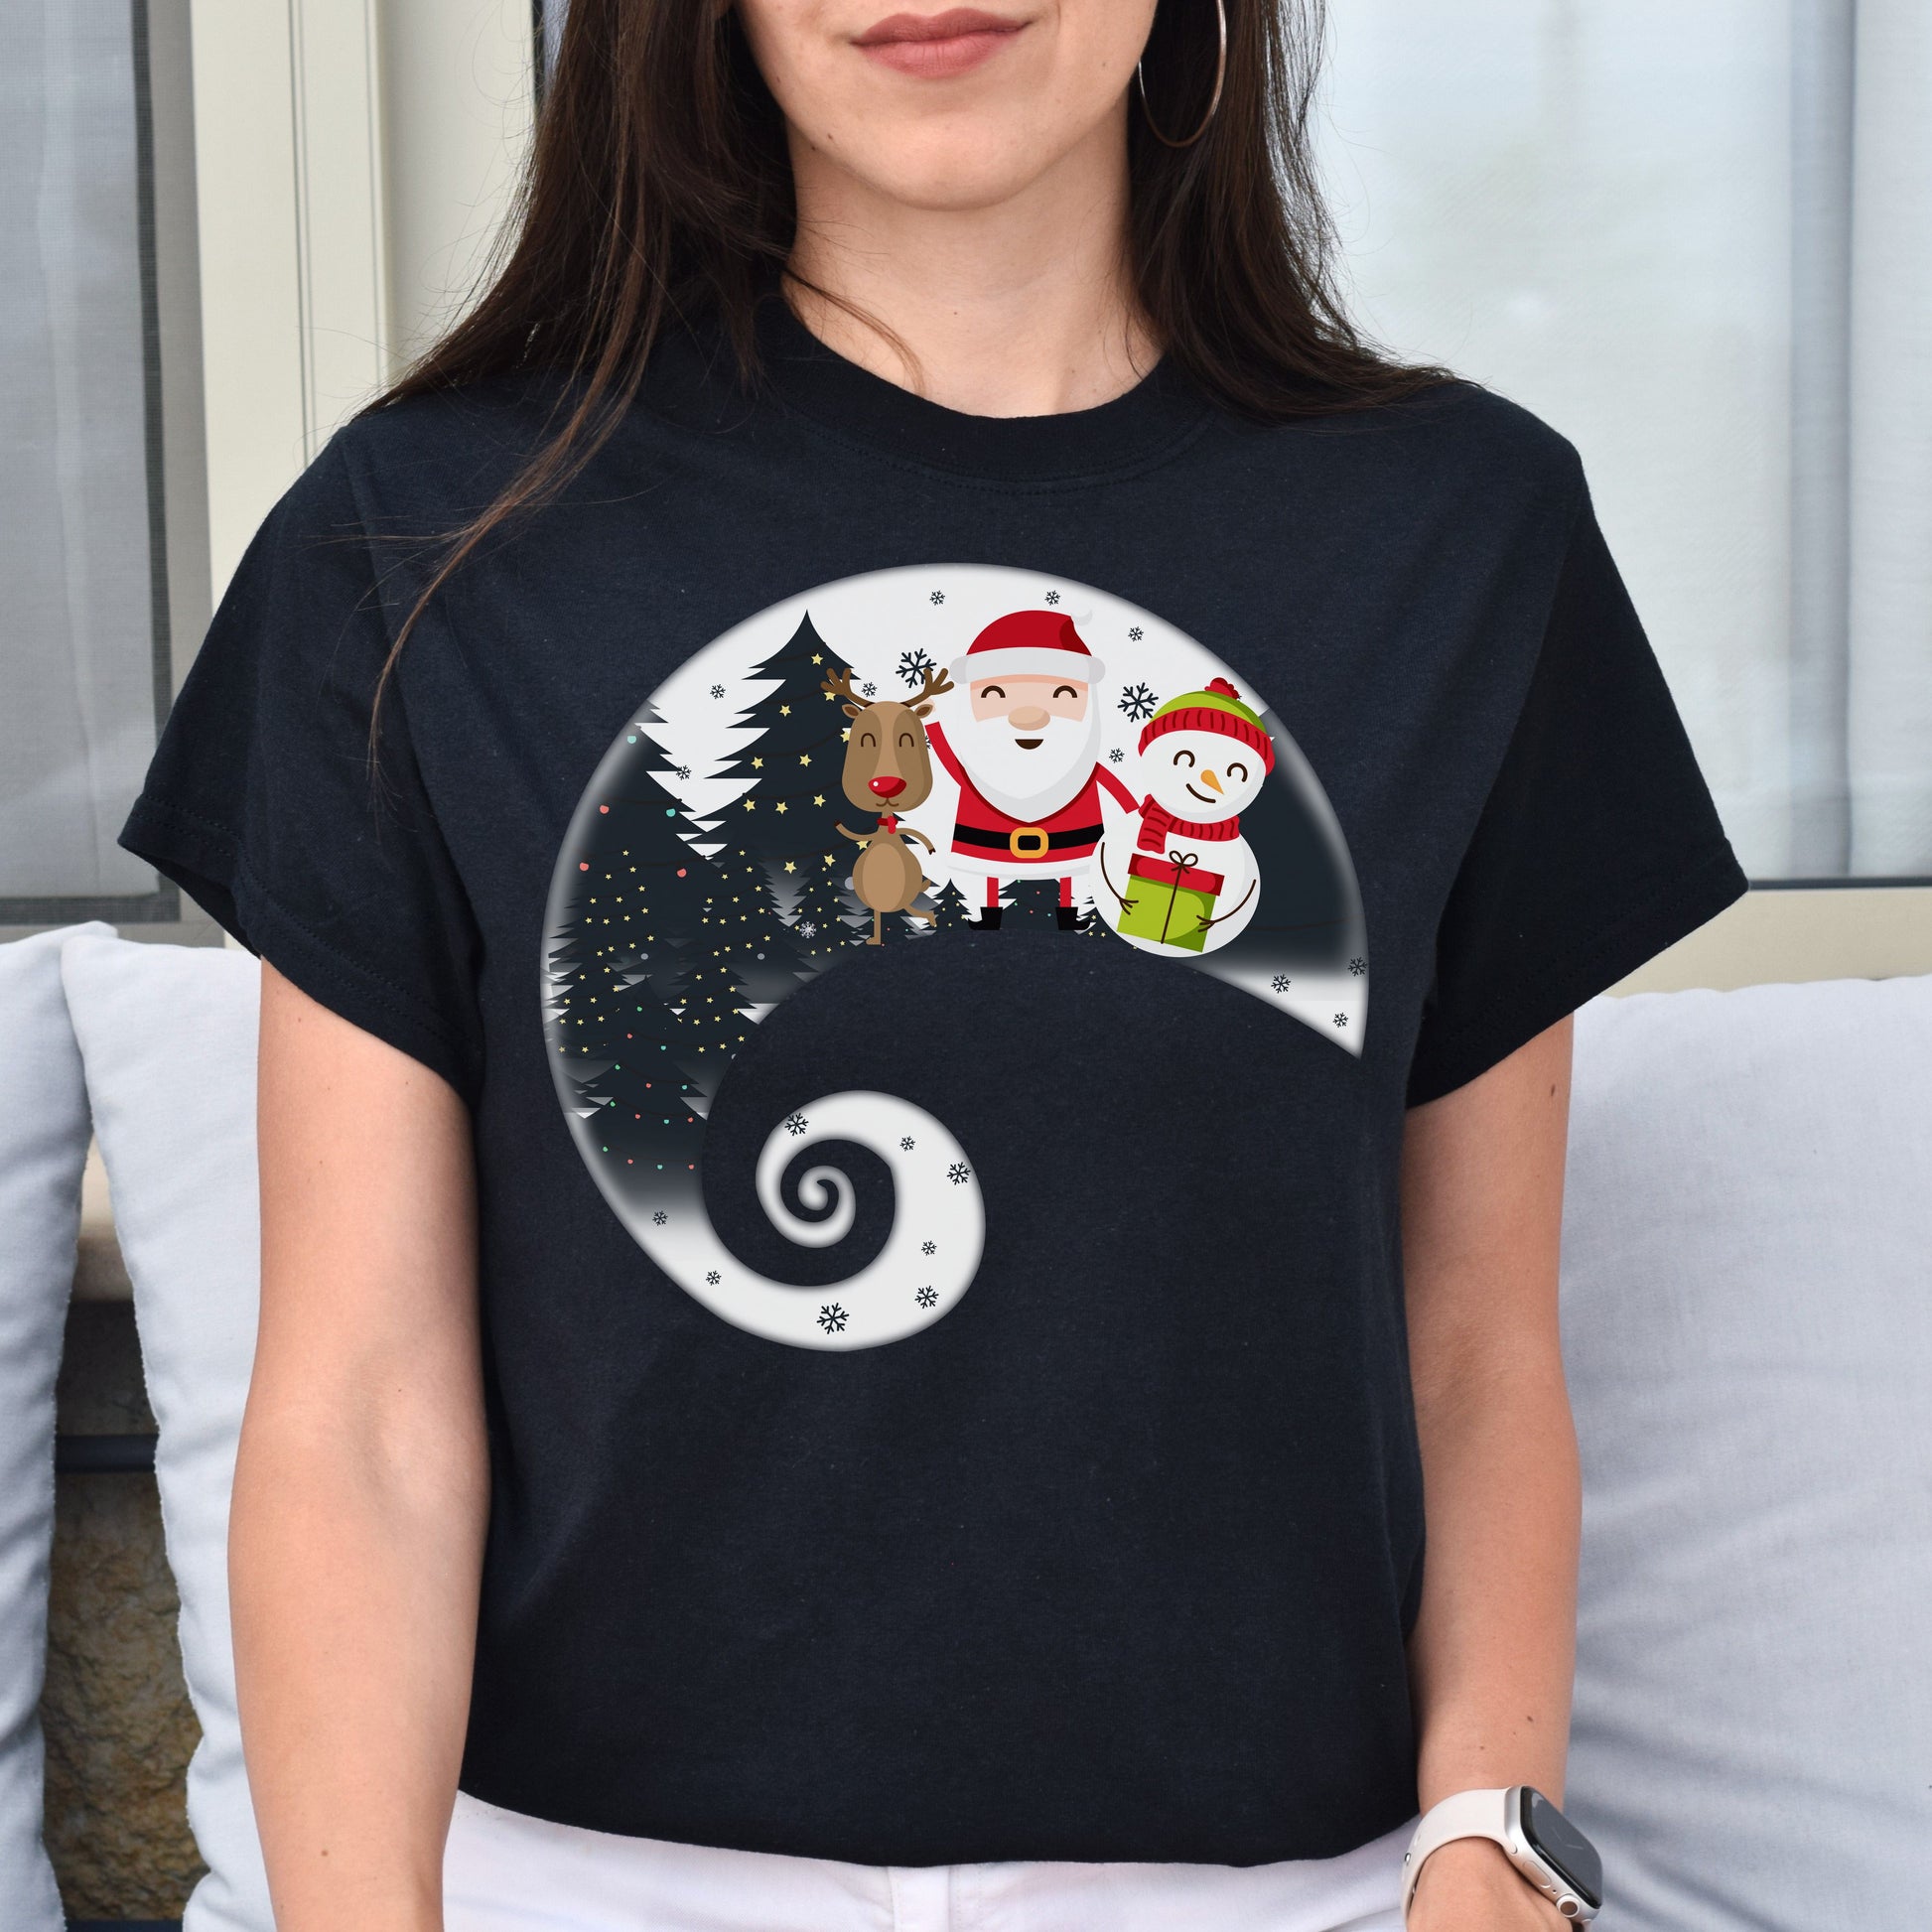 Cute Christmas Unisex shirt winter Holiday tee Black Dark Heather-Black-Family-Gift-Planet